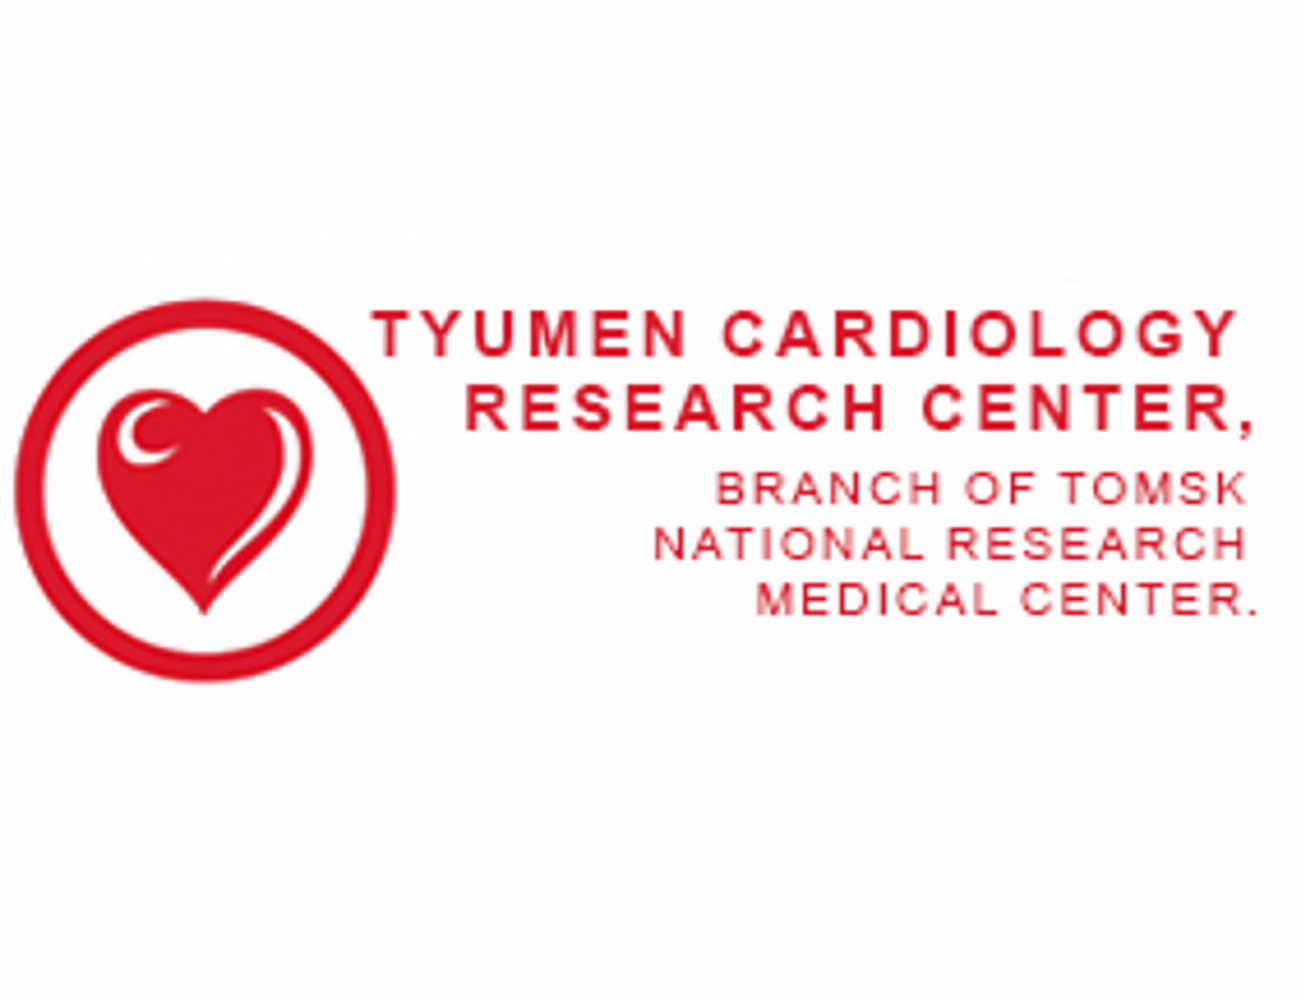 International Symposium – TCT 2012: Transcatheter Cardiovascular Therapeutics